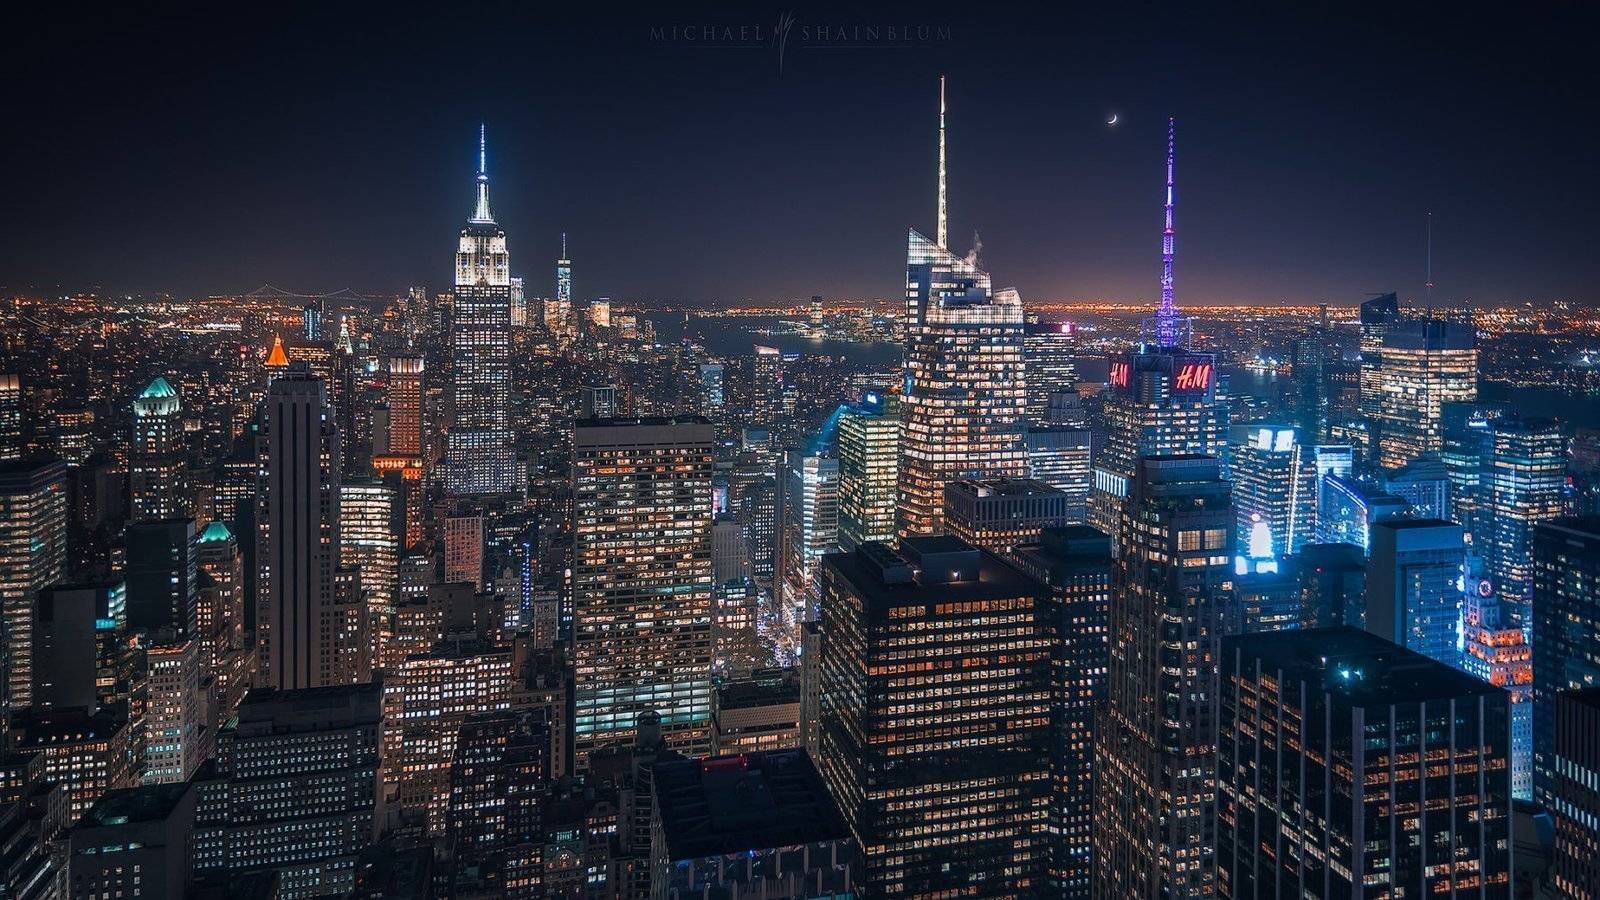 New York City, Night Cityscape Photography - Michael Shainblum Photography